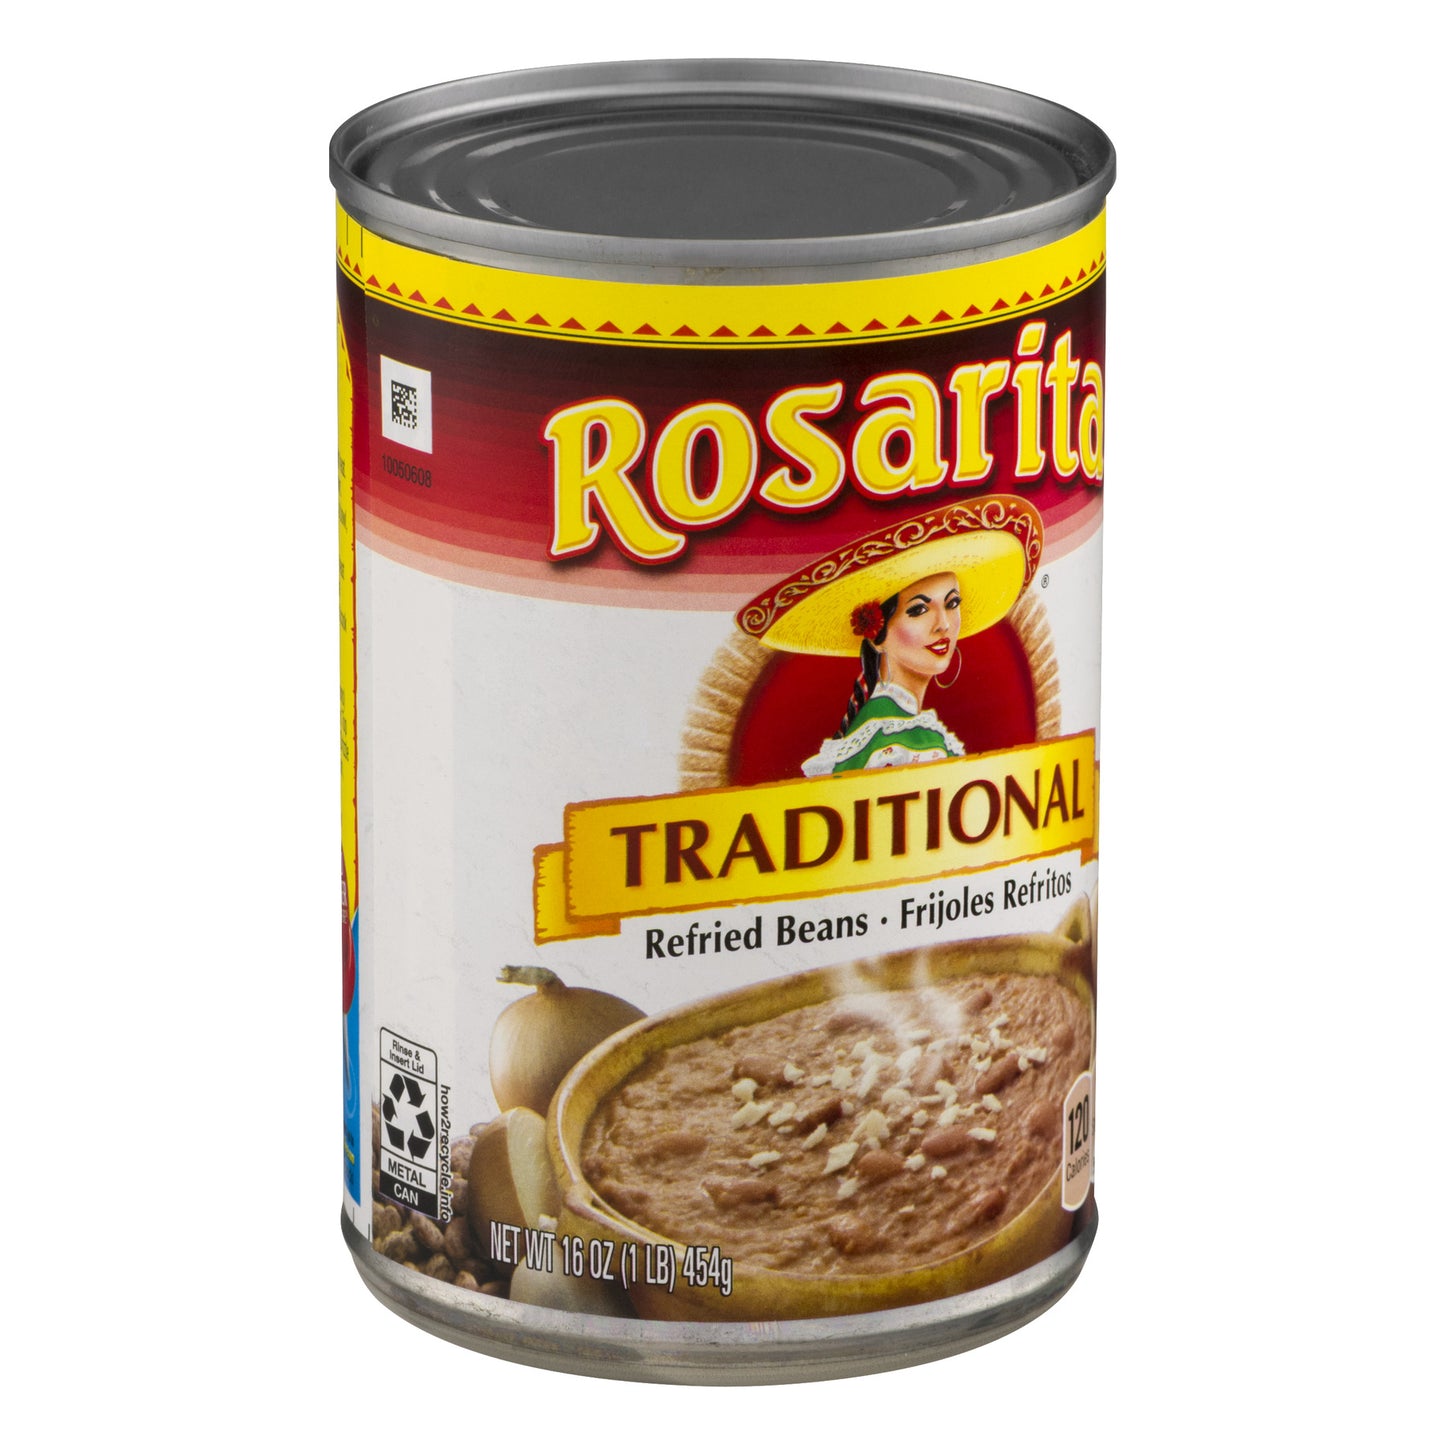 Rosarita Traditional Refried Beans, 16 oz